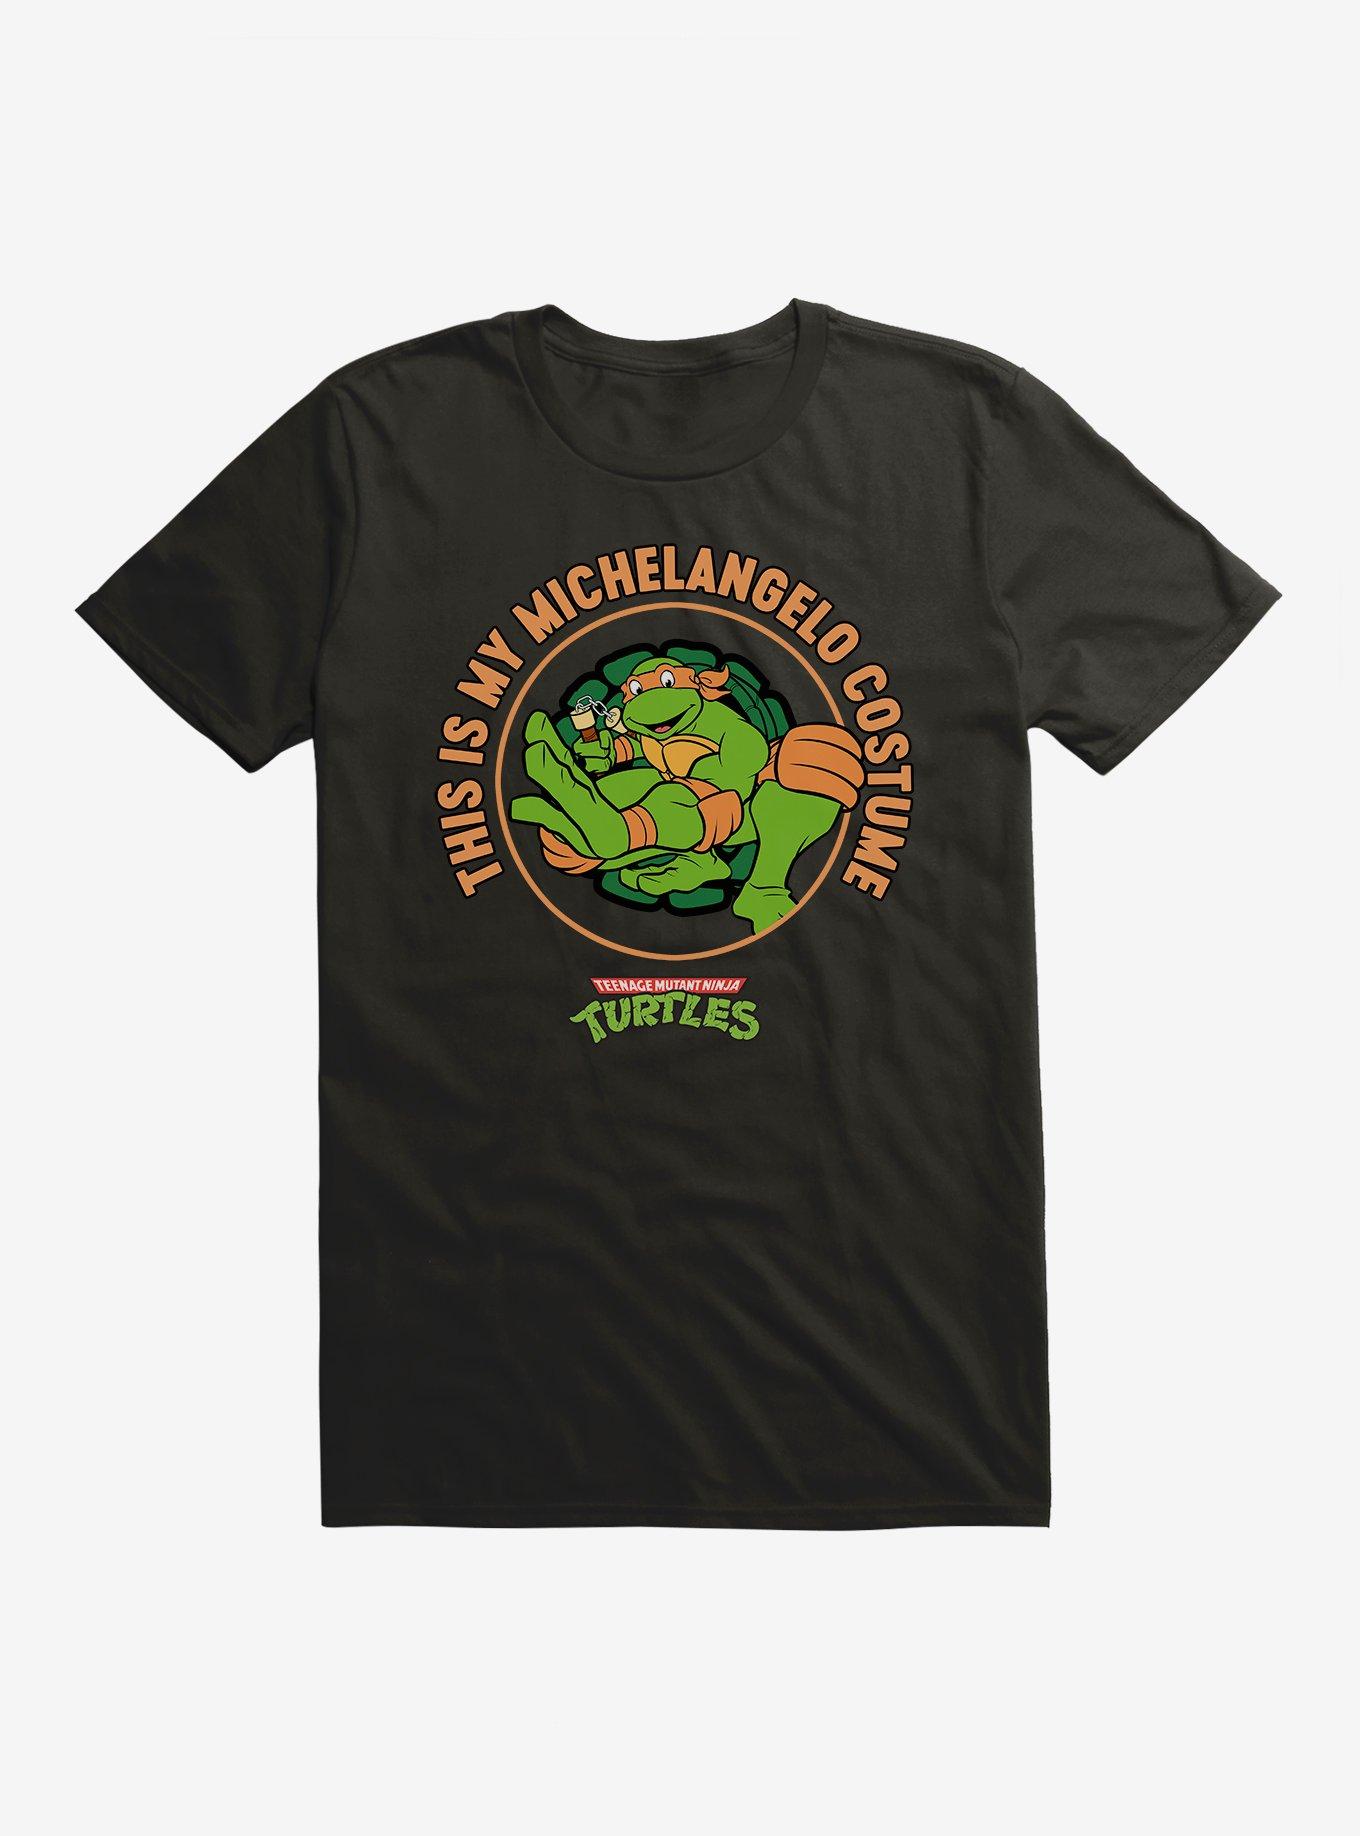 Teenage Mutant Ninja Turtles Michelangelo Costume T-Shirt